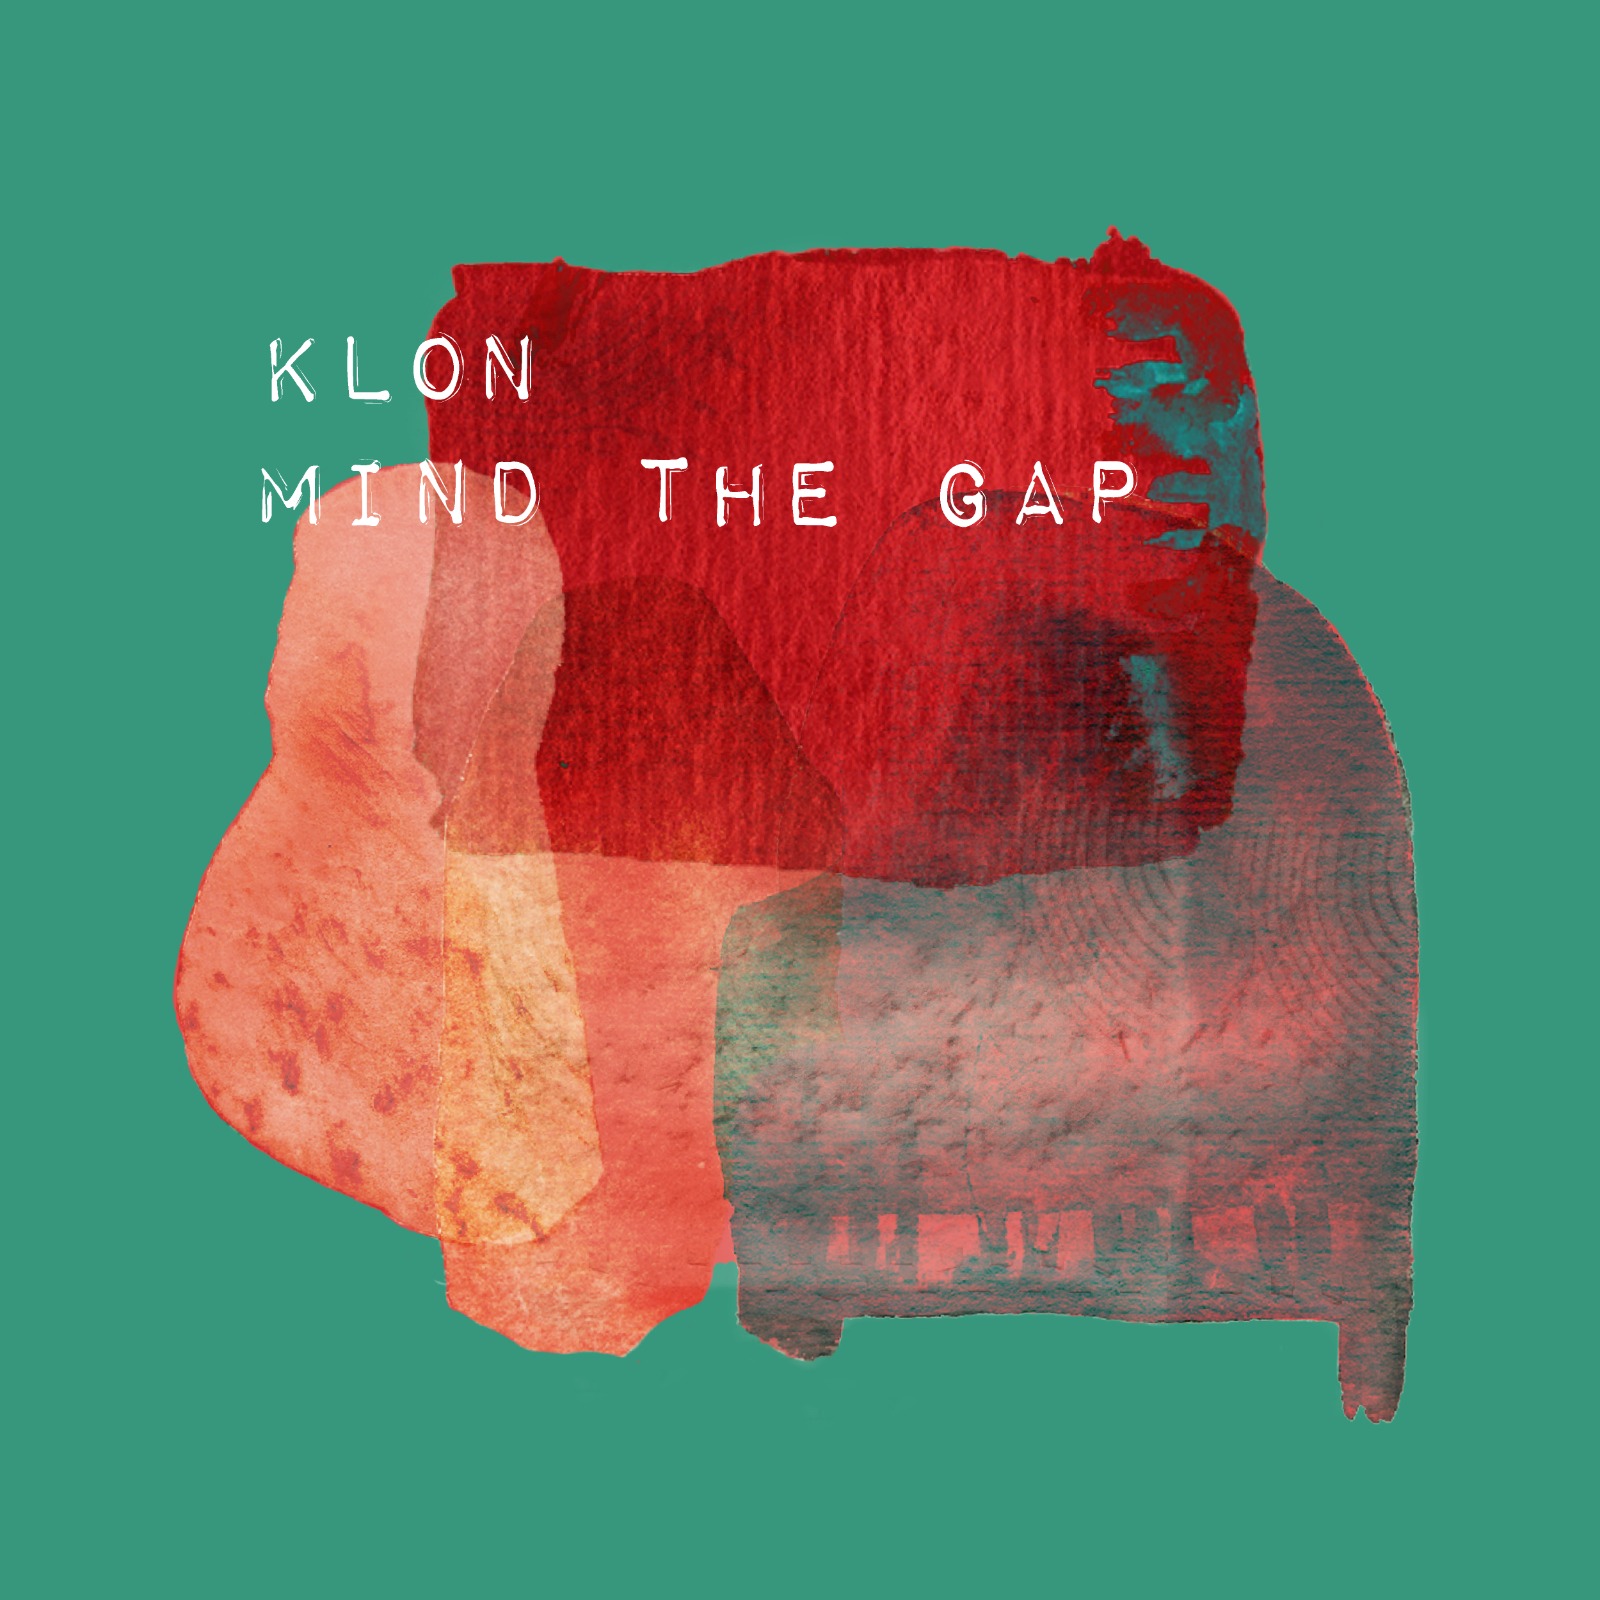 KLON 'Mind the Gap' OUT NOW! (https://dariusheid.bandcamp.com/album/klon-mind-the-gap)